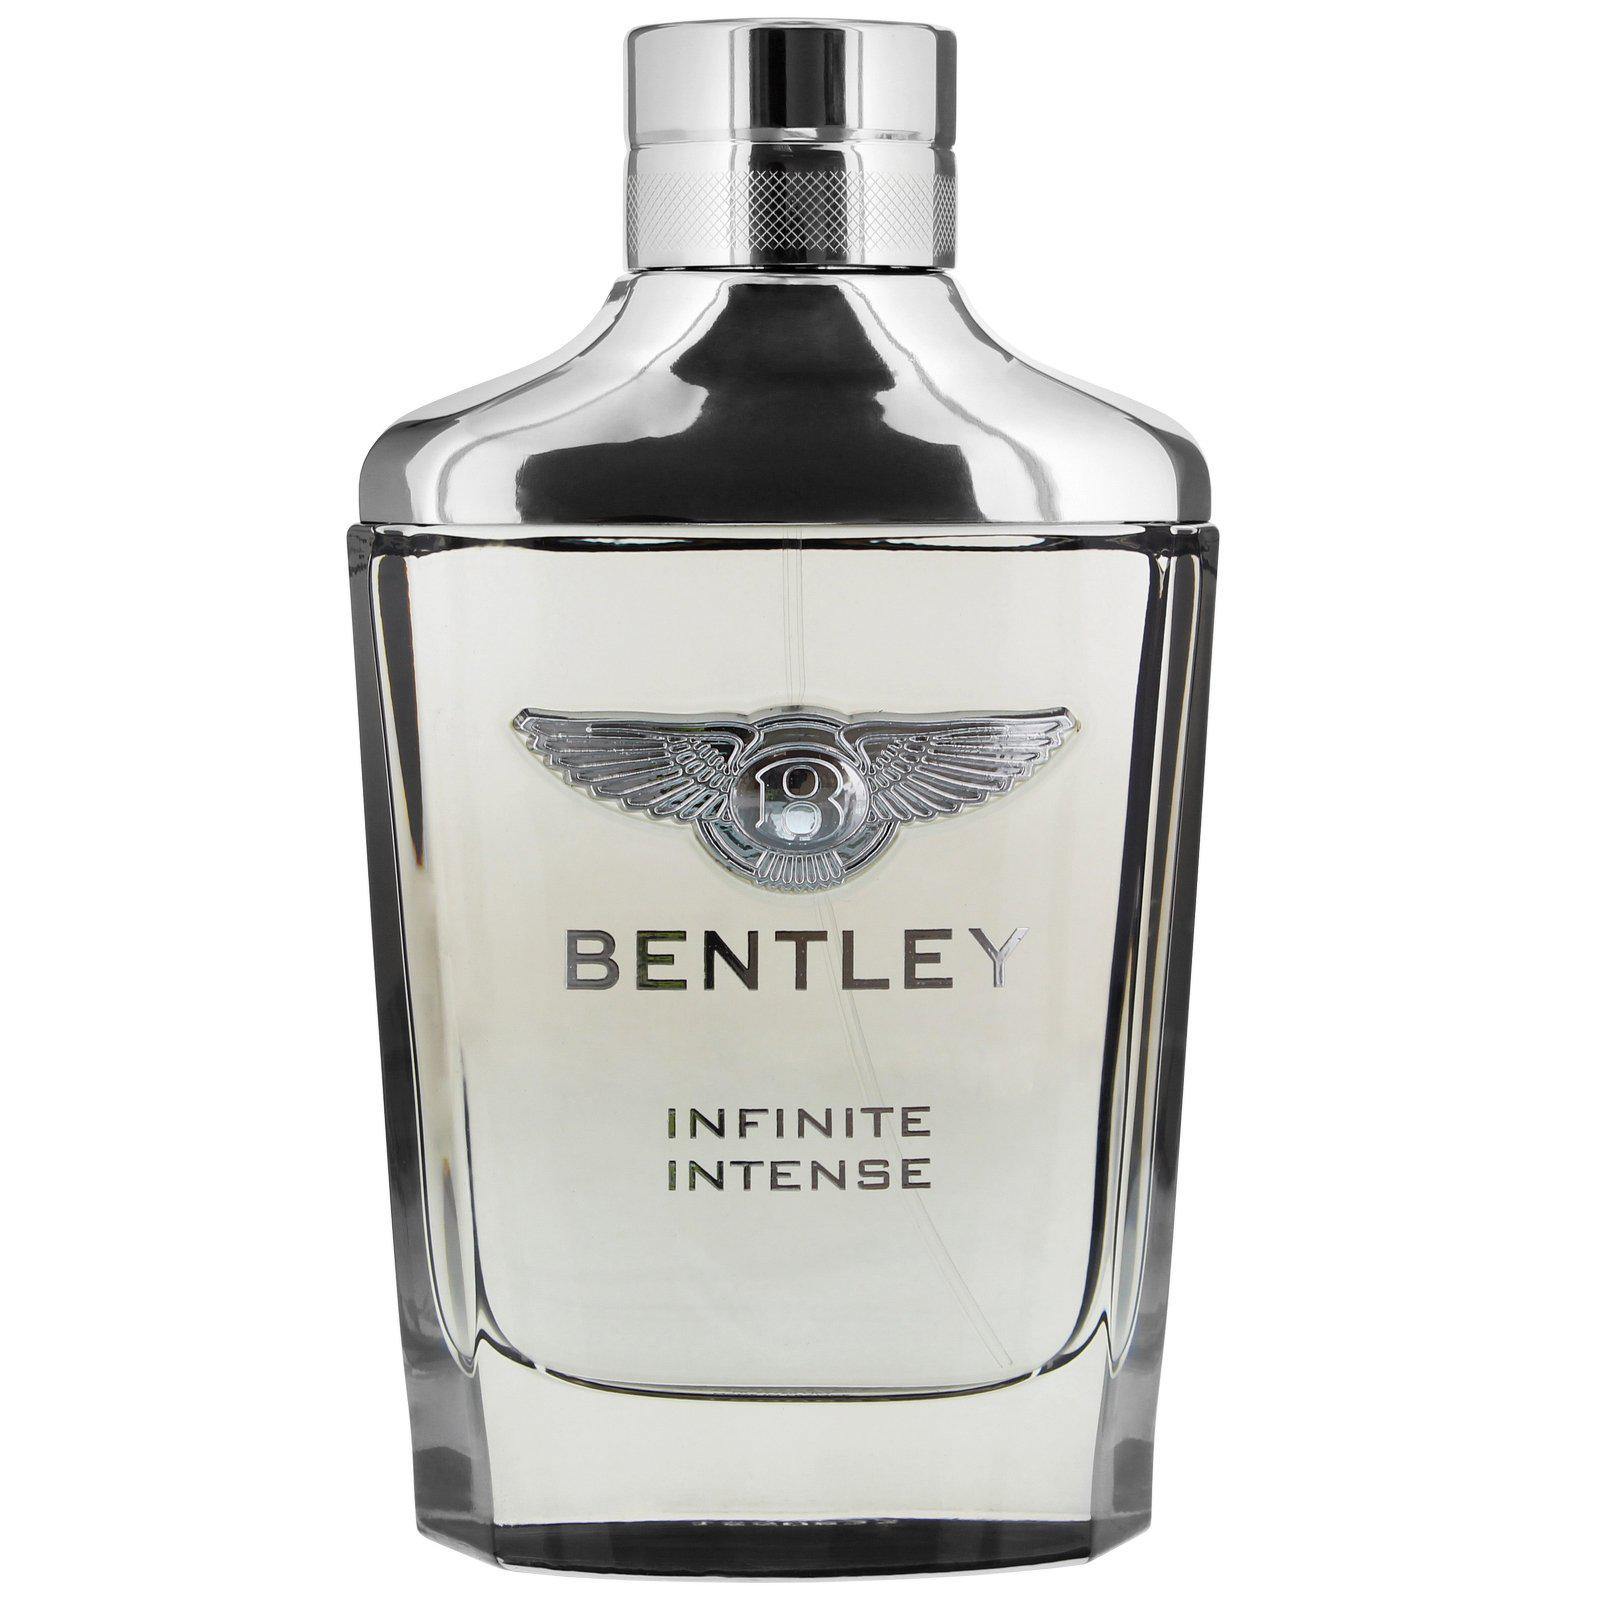 Bentley Infinite Intense Cologne